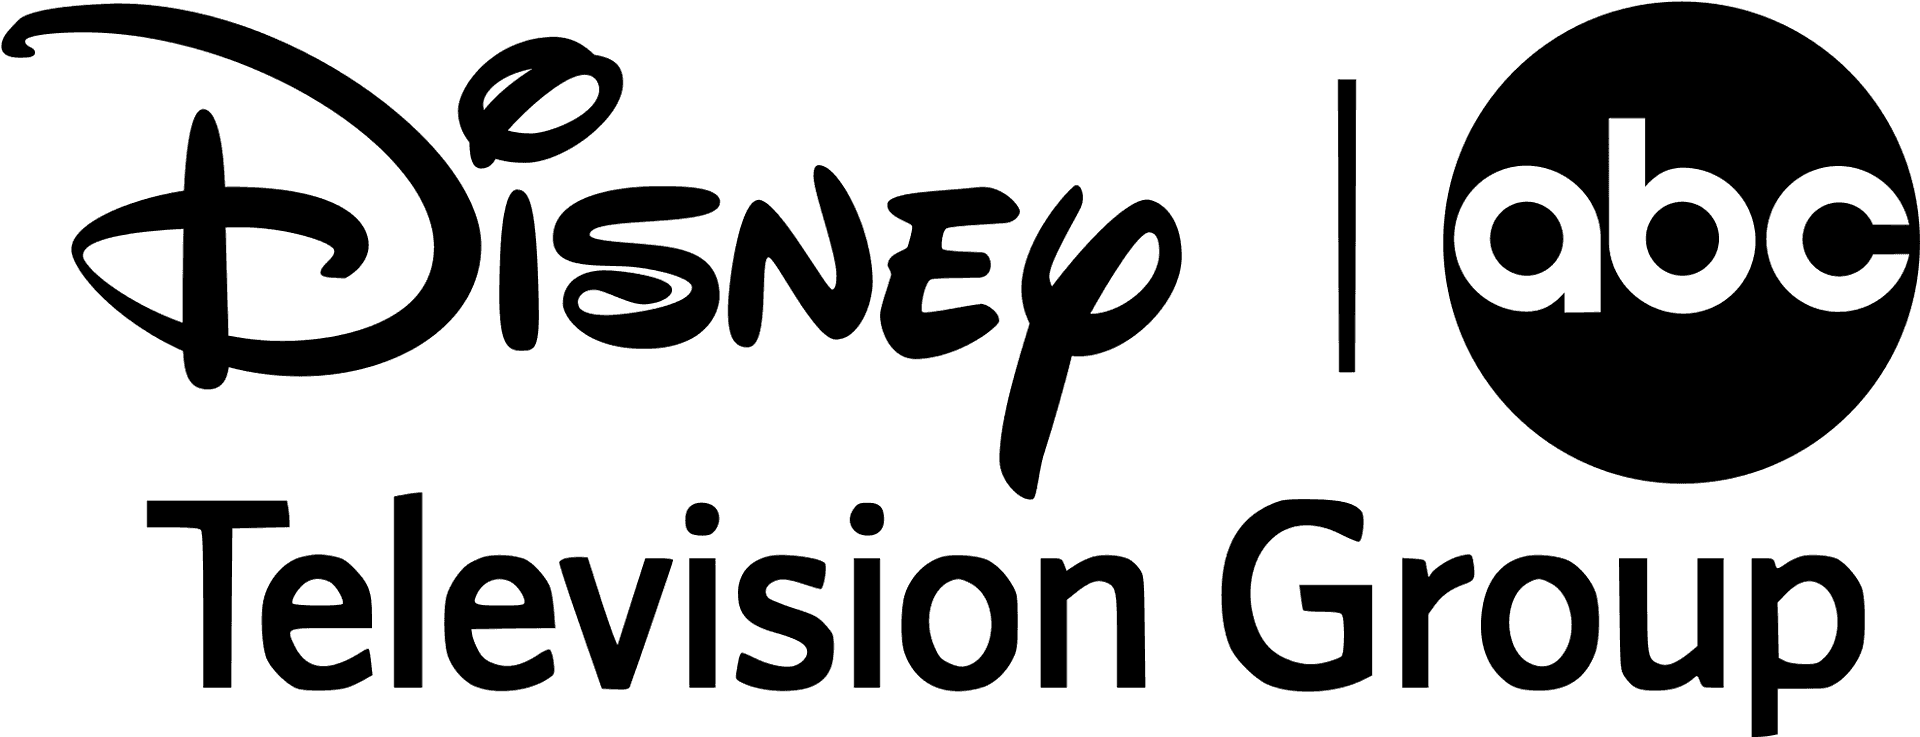 Disney A B C Television Group Logo PNG